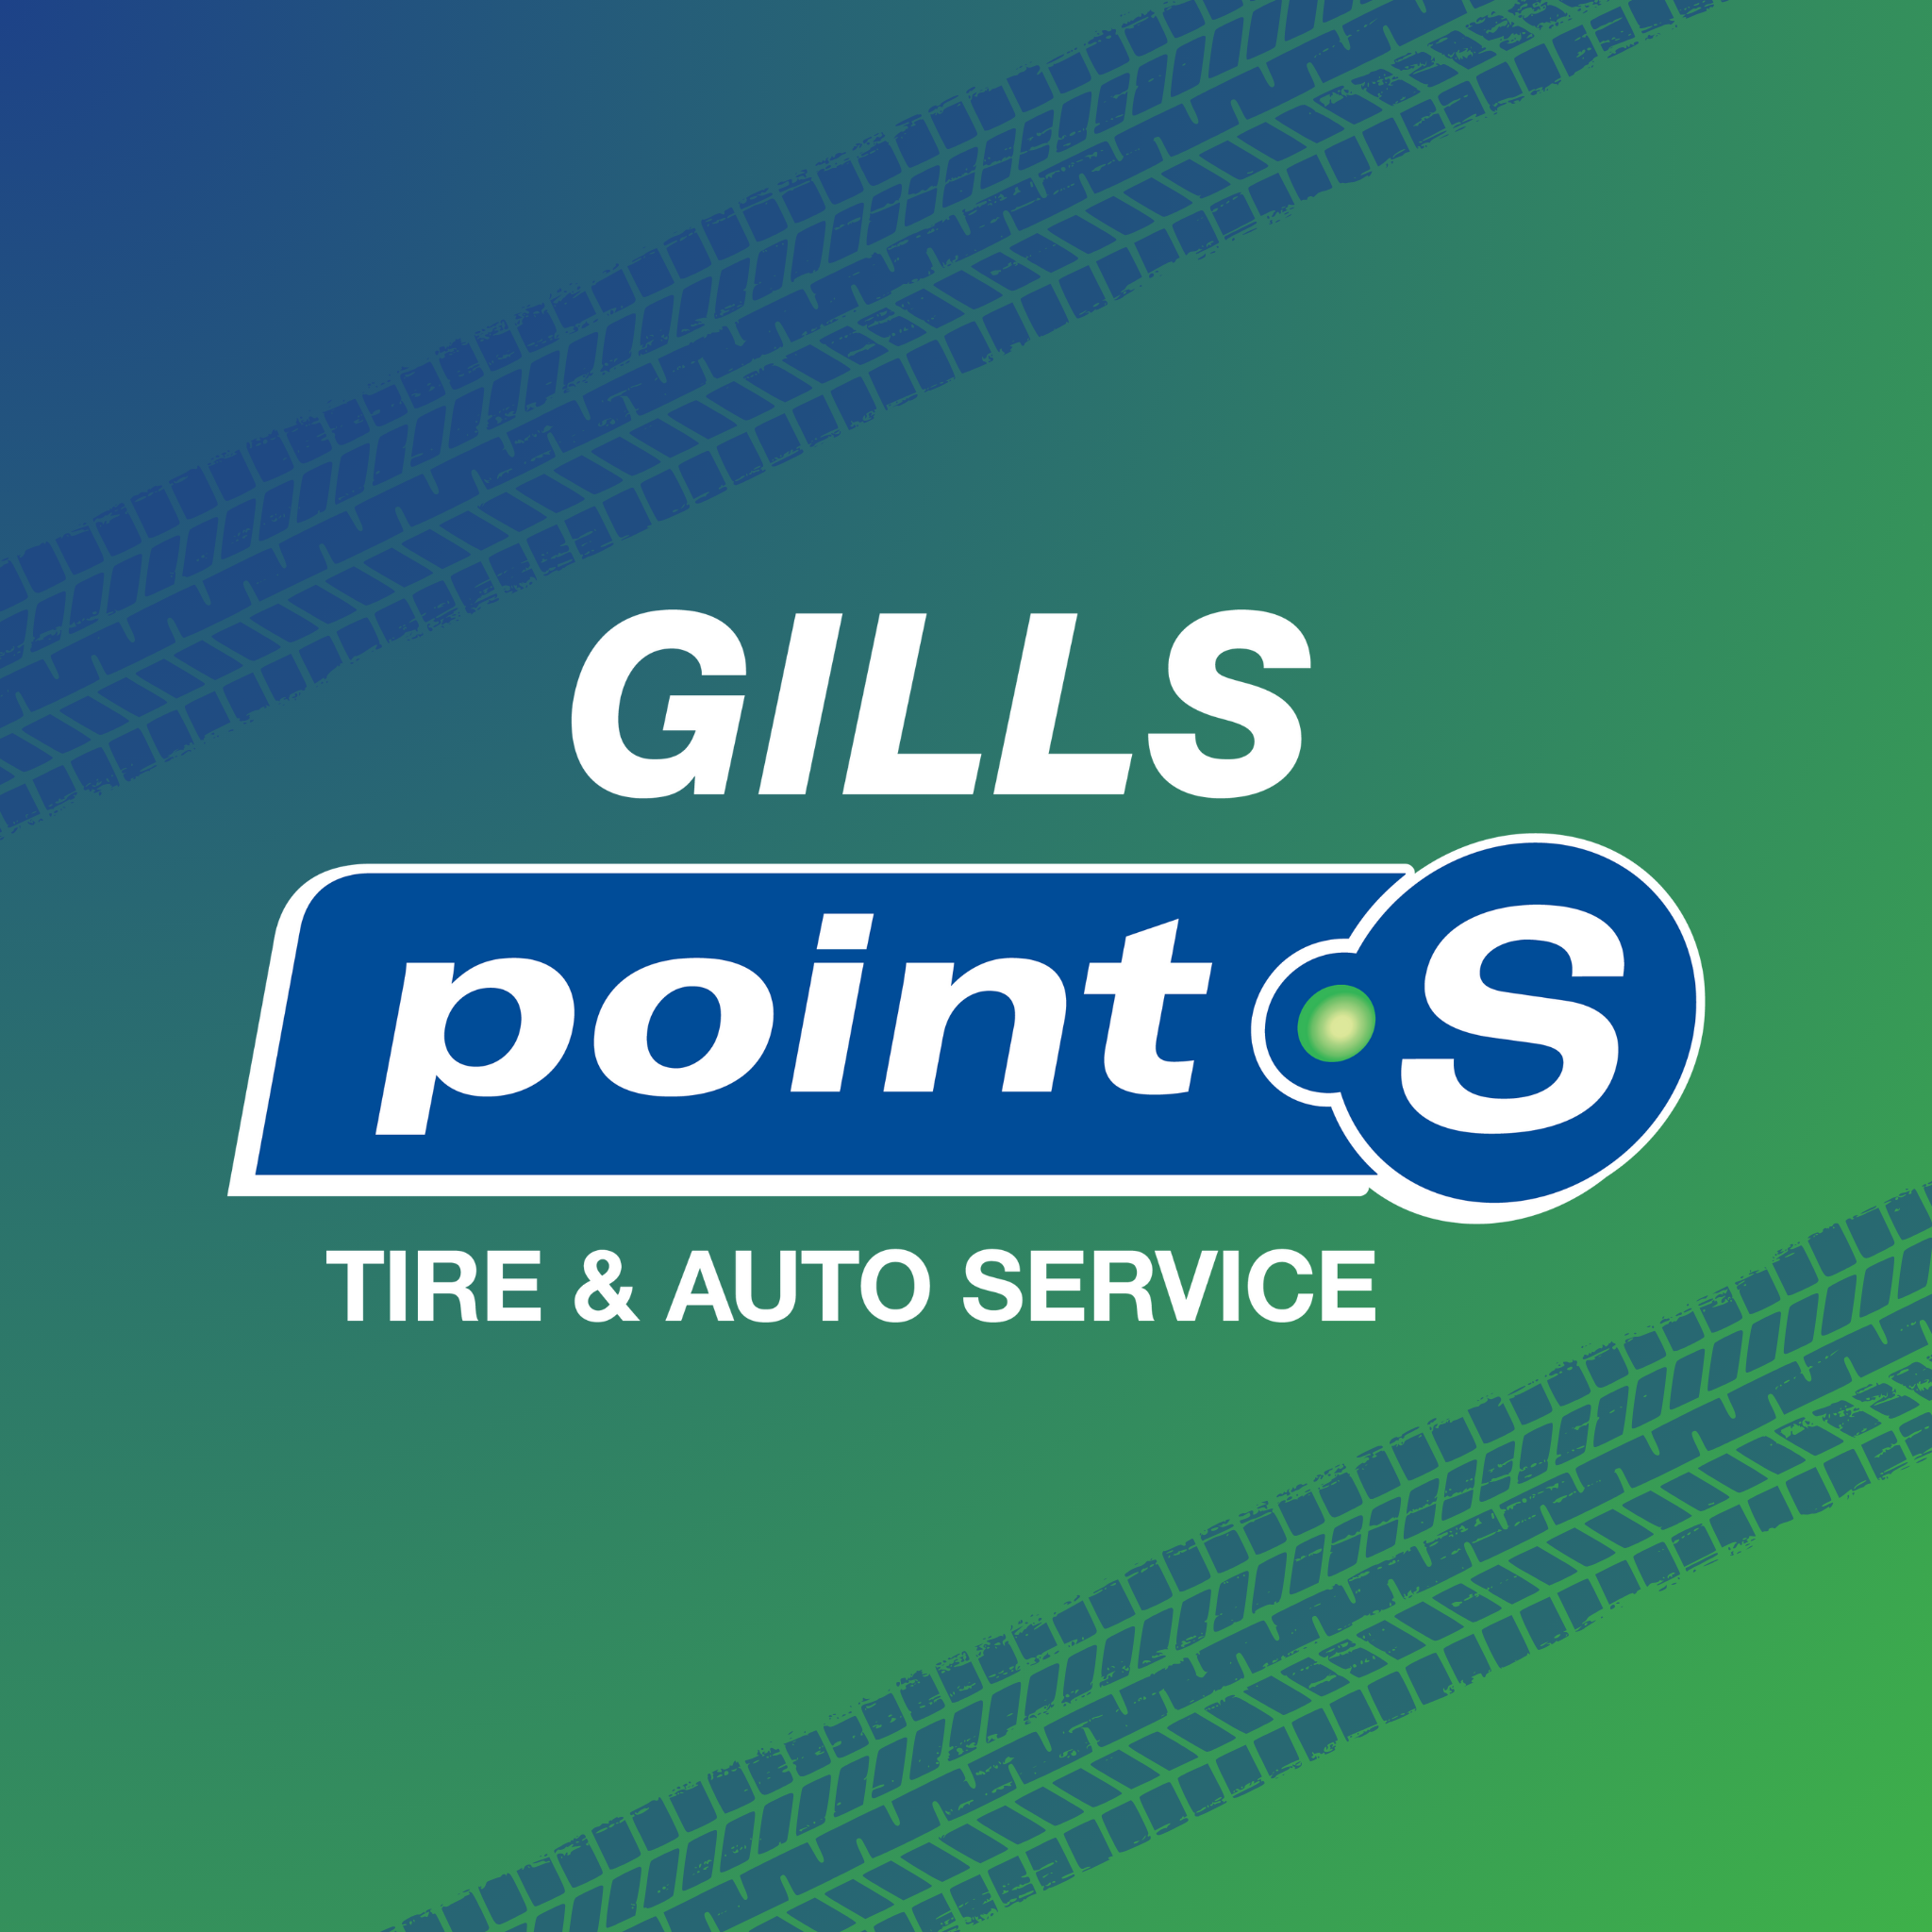 Gills Point S Tire & Auto - North Adams